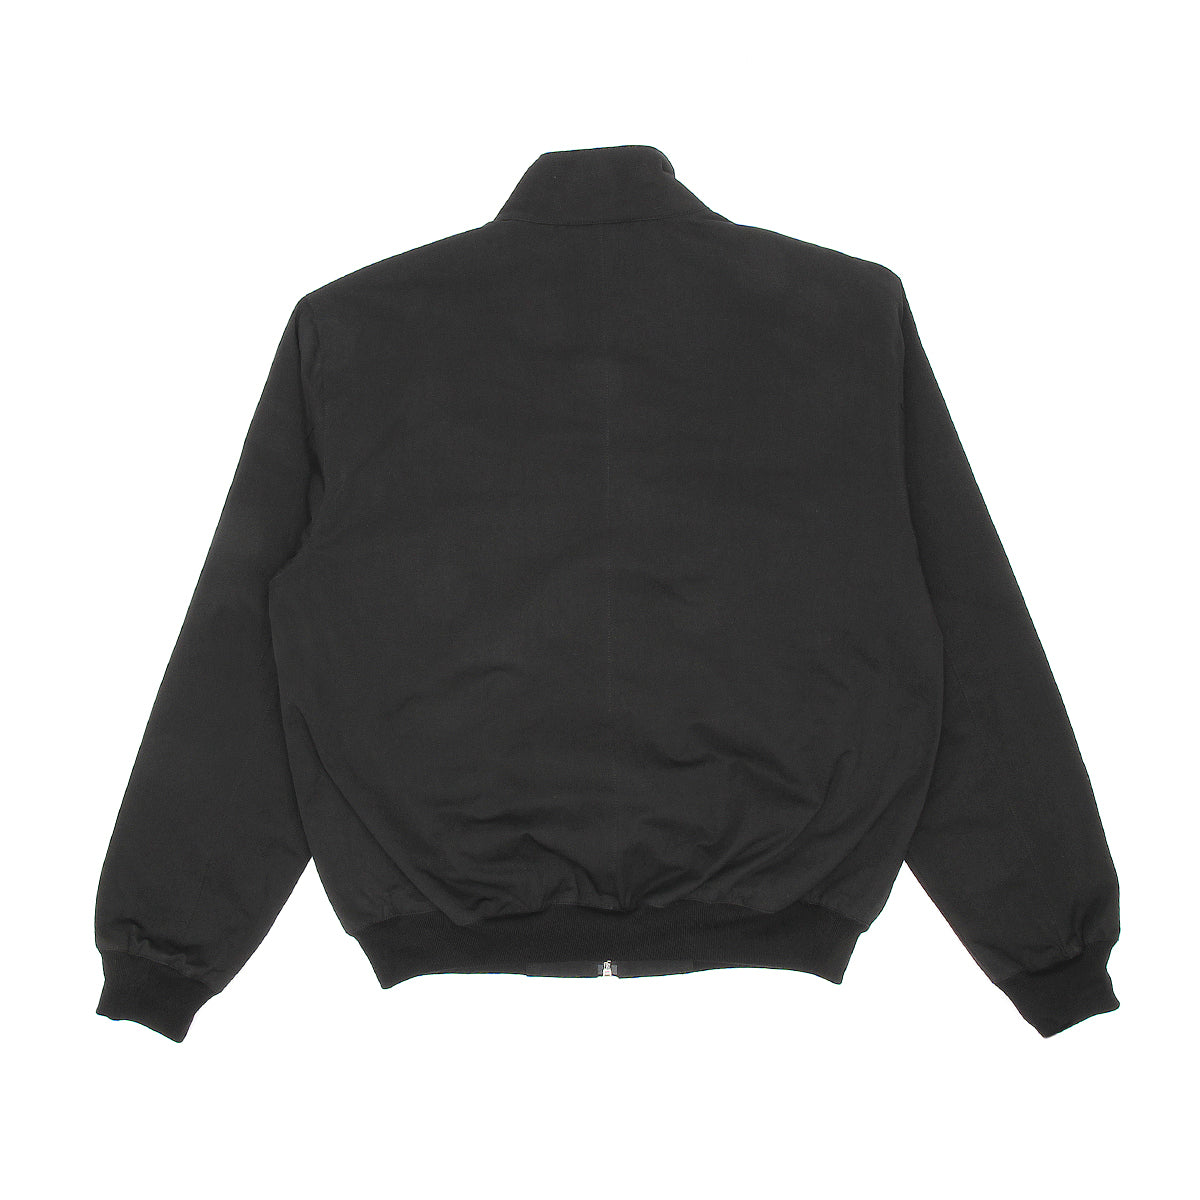 Grand Harrington Jacket Black